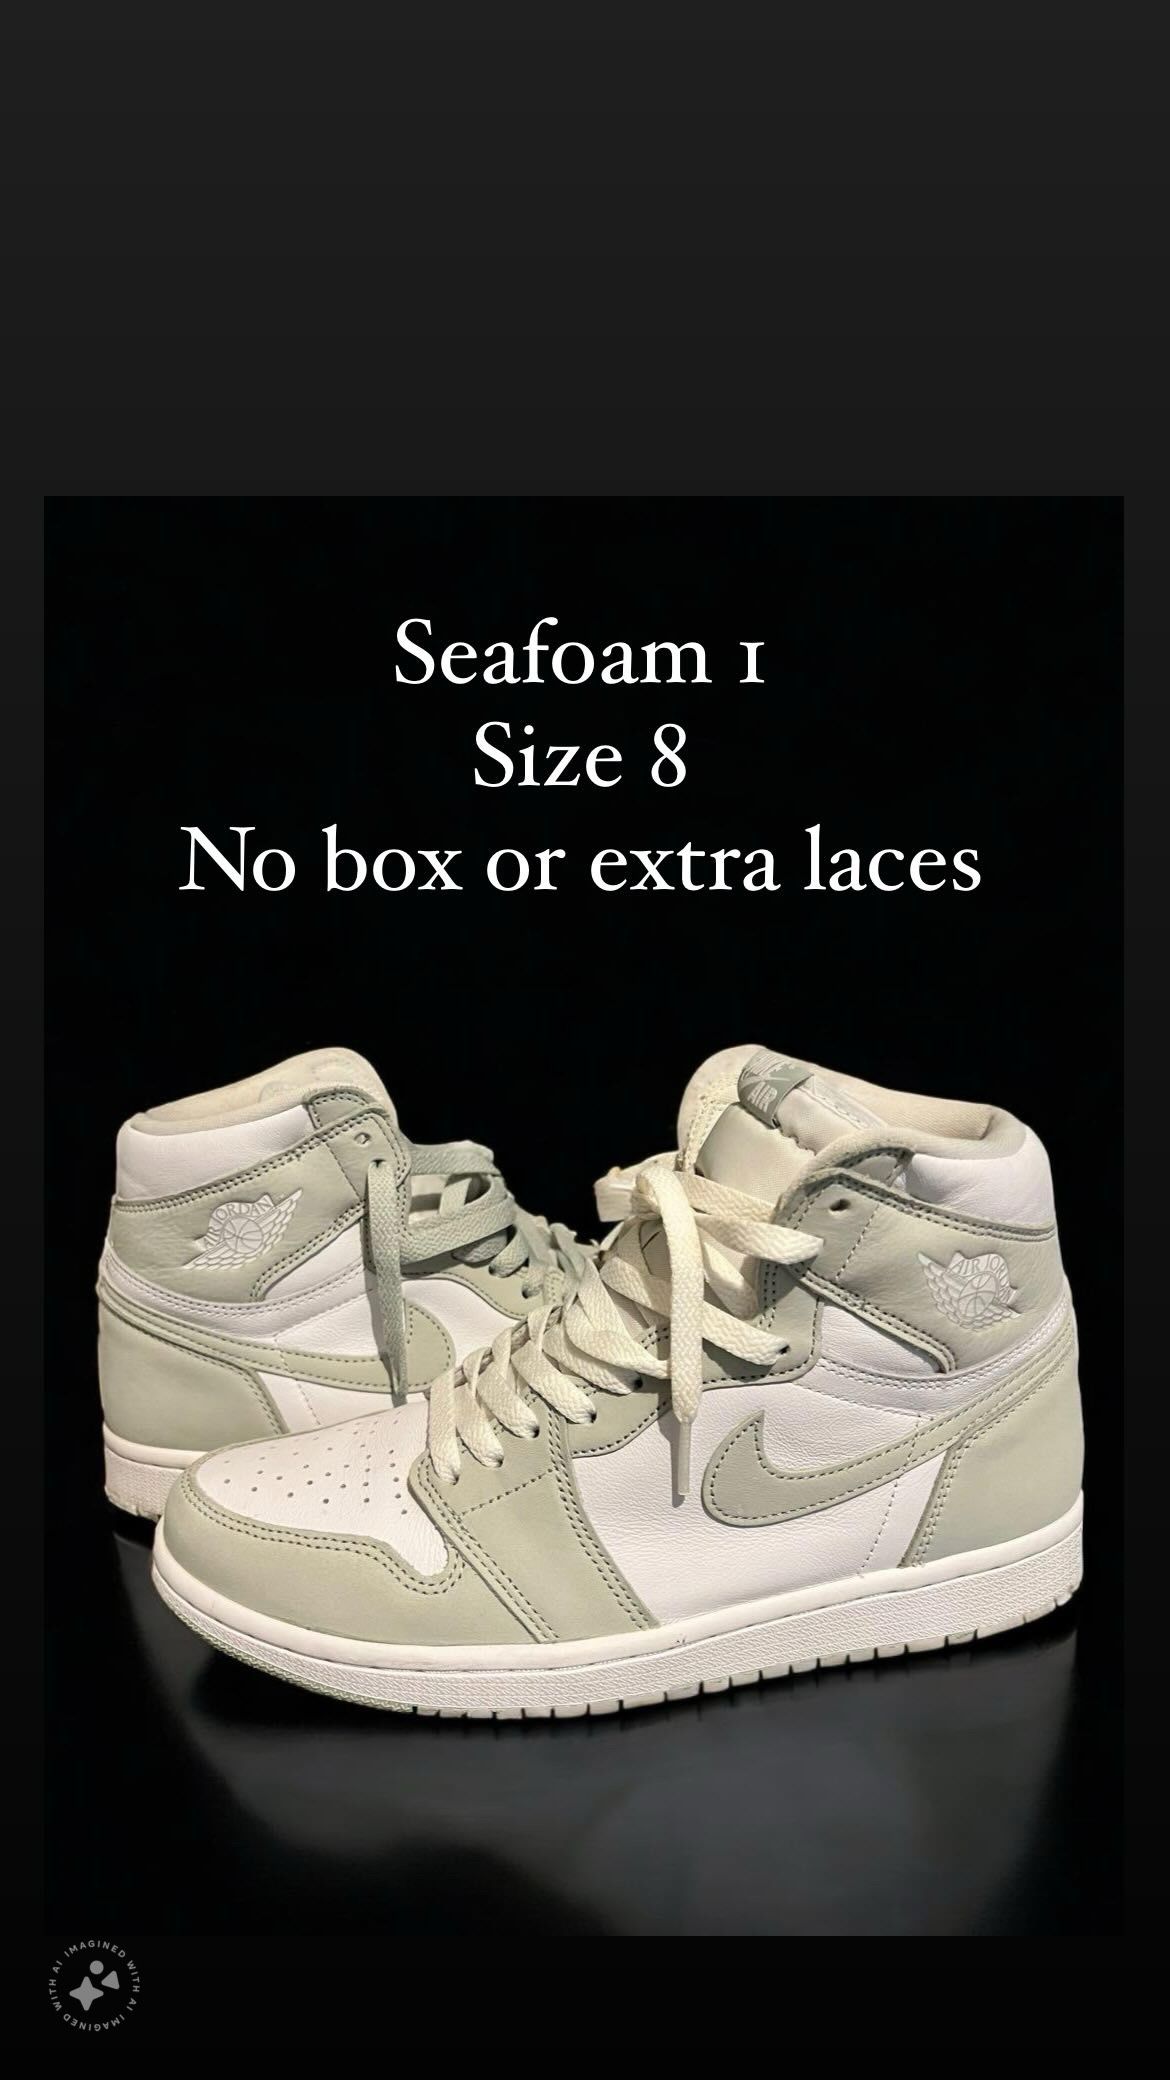 Nike Air Jordan Retro 1 Seafoam Size 8